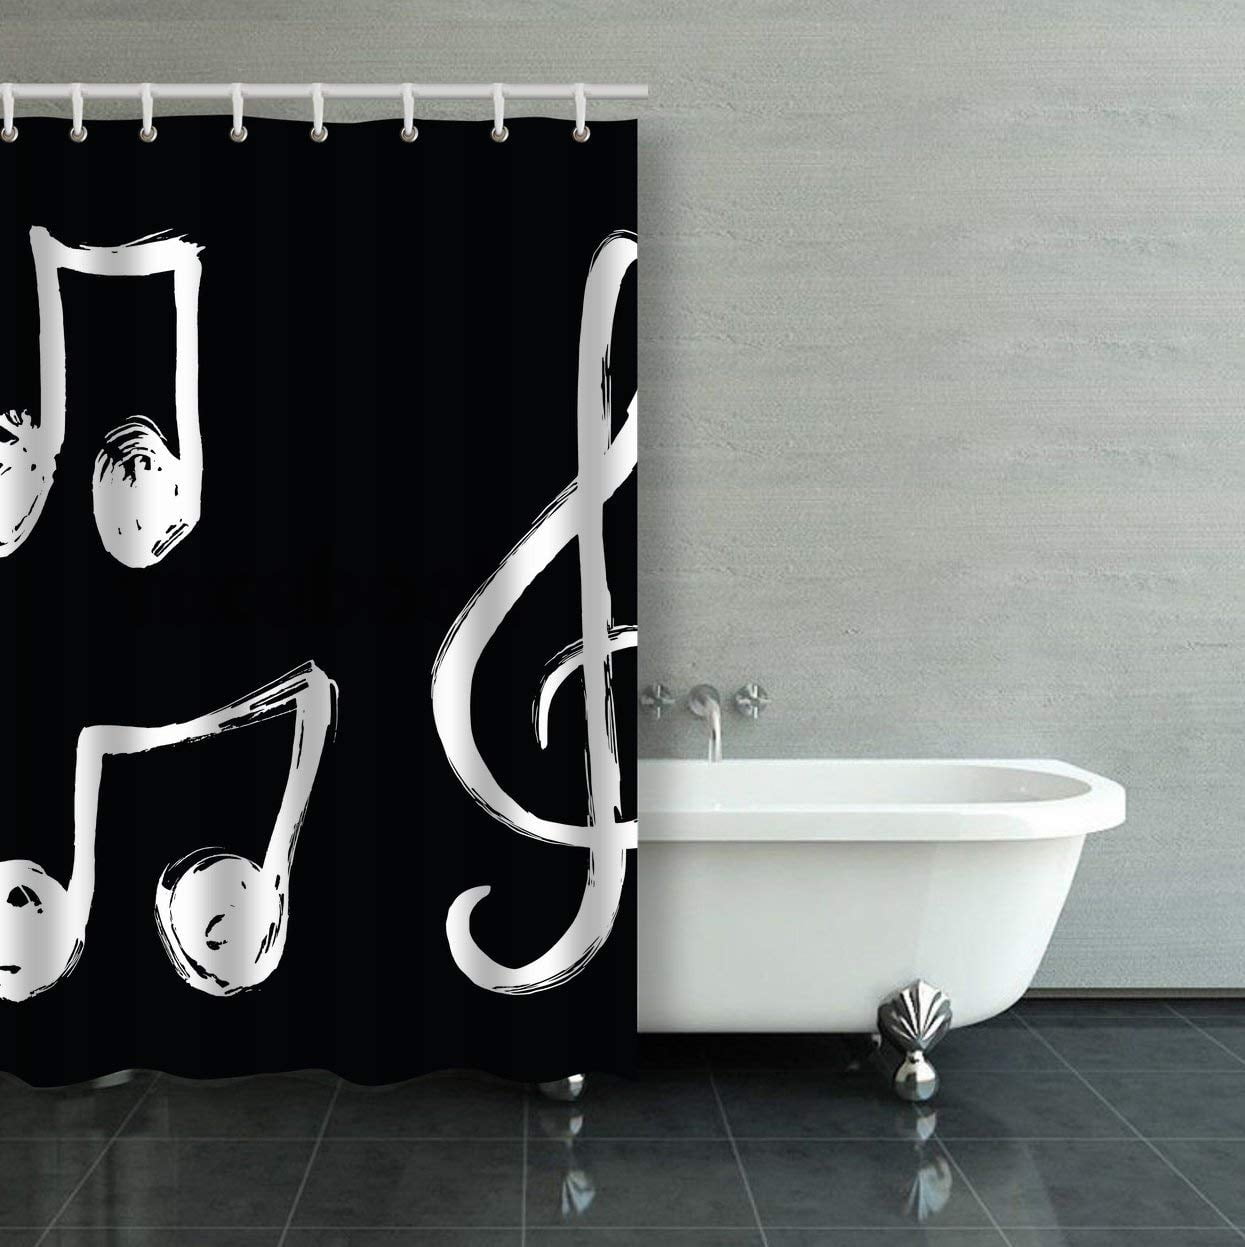 Elvis Presley Bathroom Waterproof Fabric Shower Curtain 60 X 72 Inch 